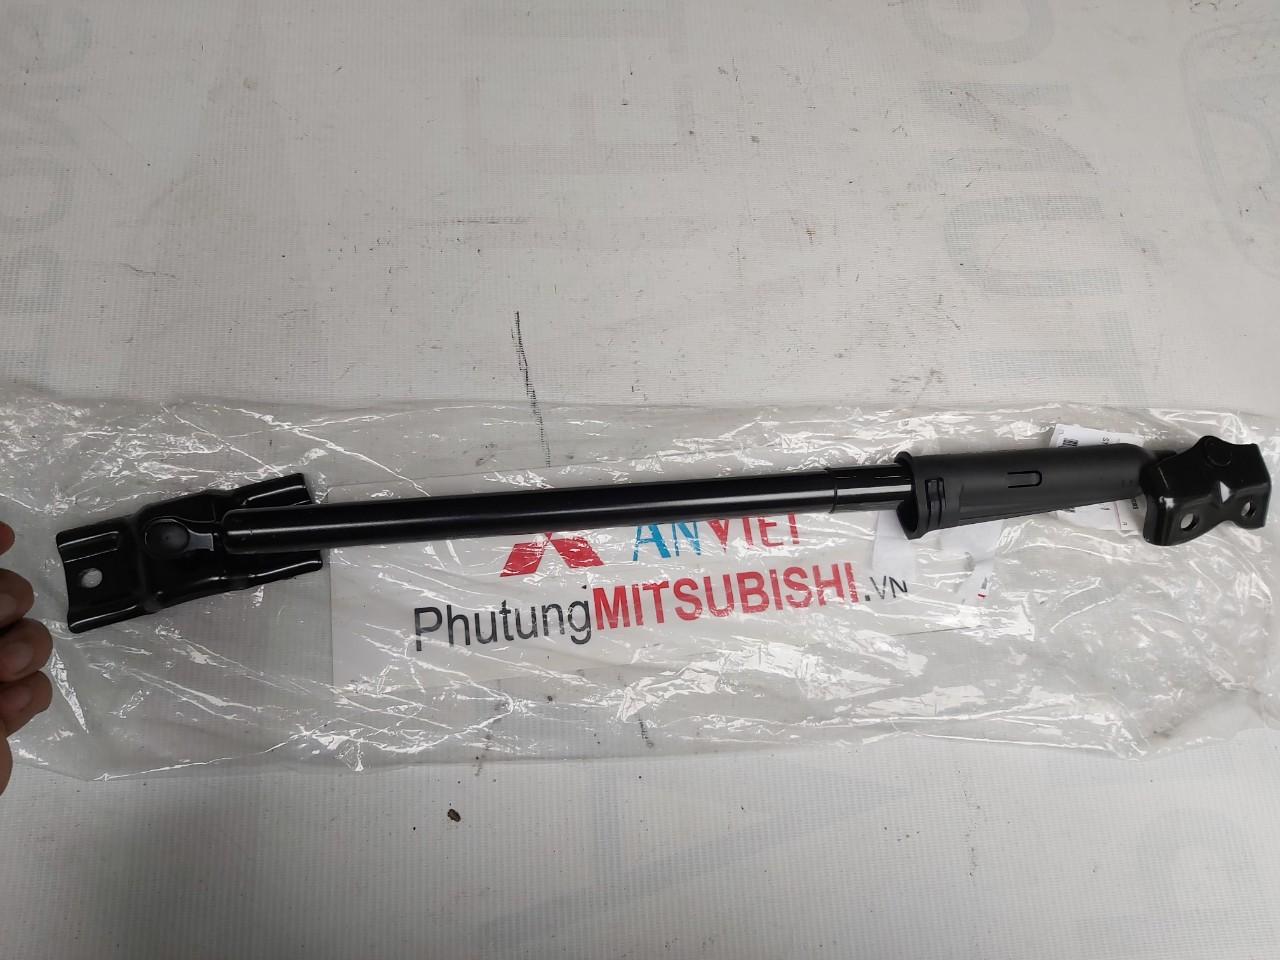 Thanh hạn chế cửa hậu xe Mitsubishi Pajero V93